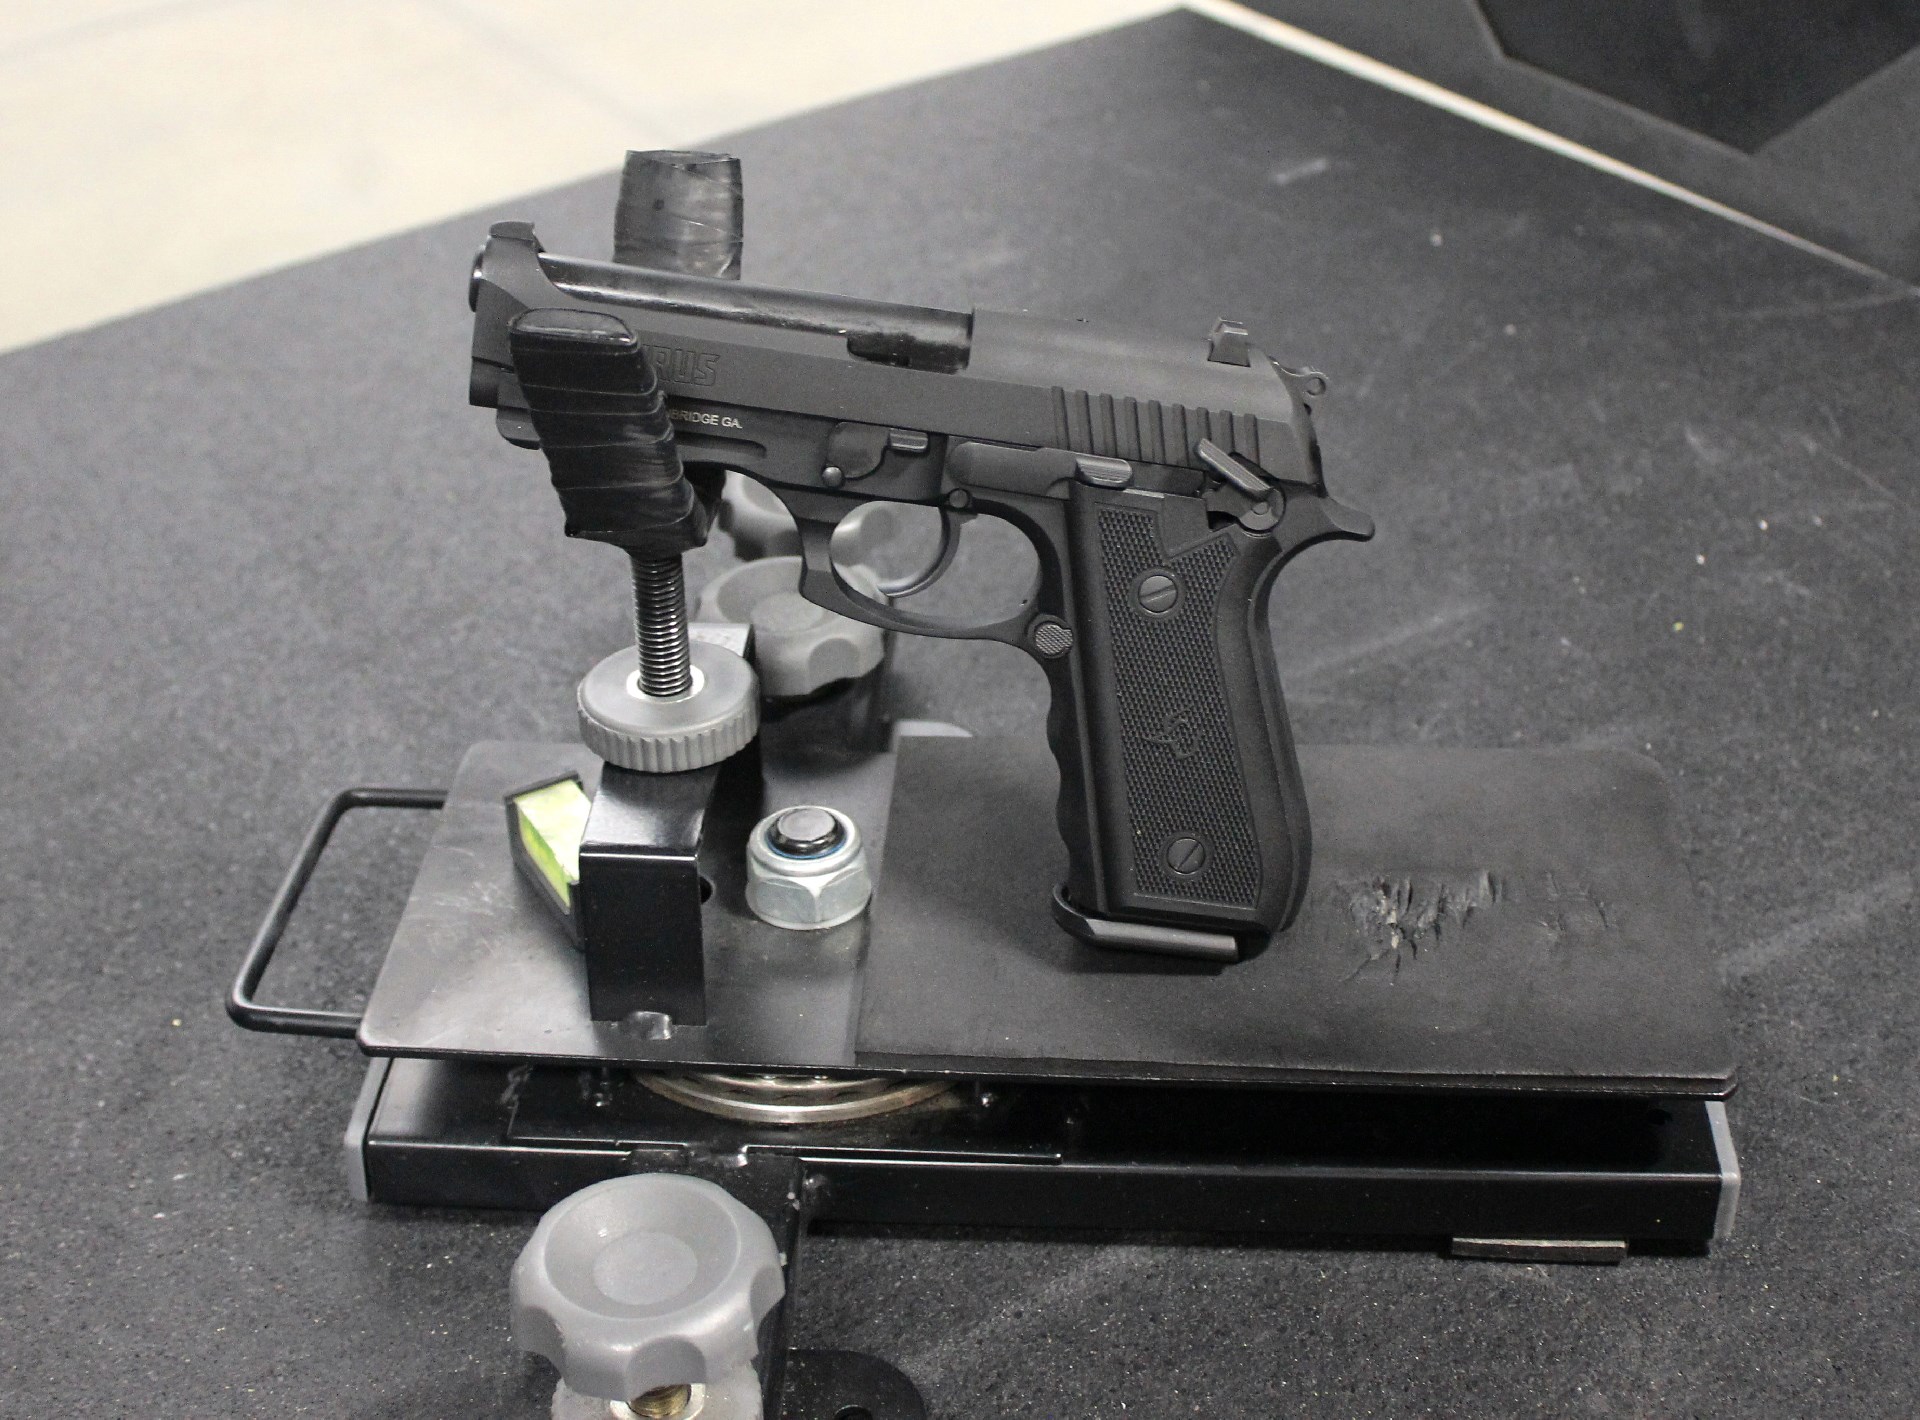 Taurus 917c pistol in cradle on shooting range